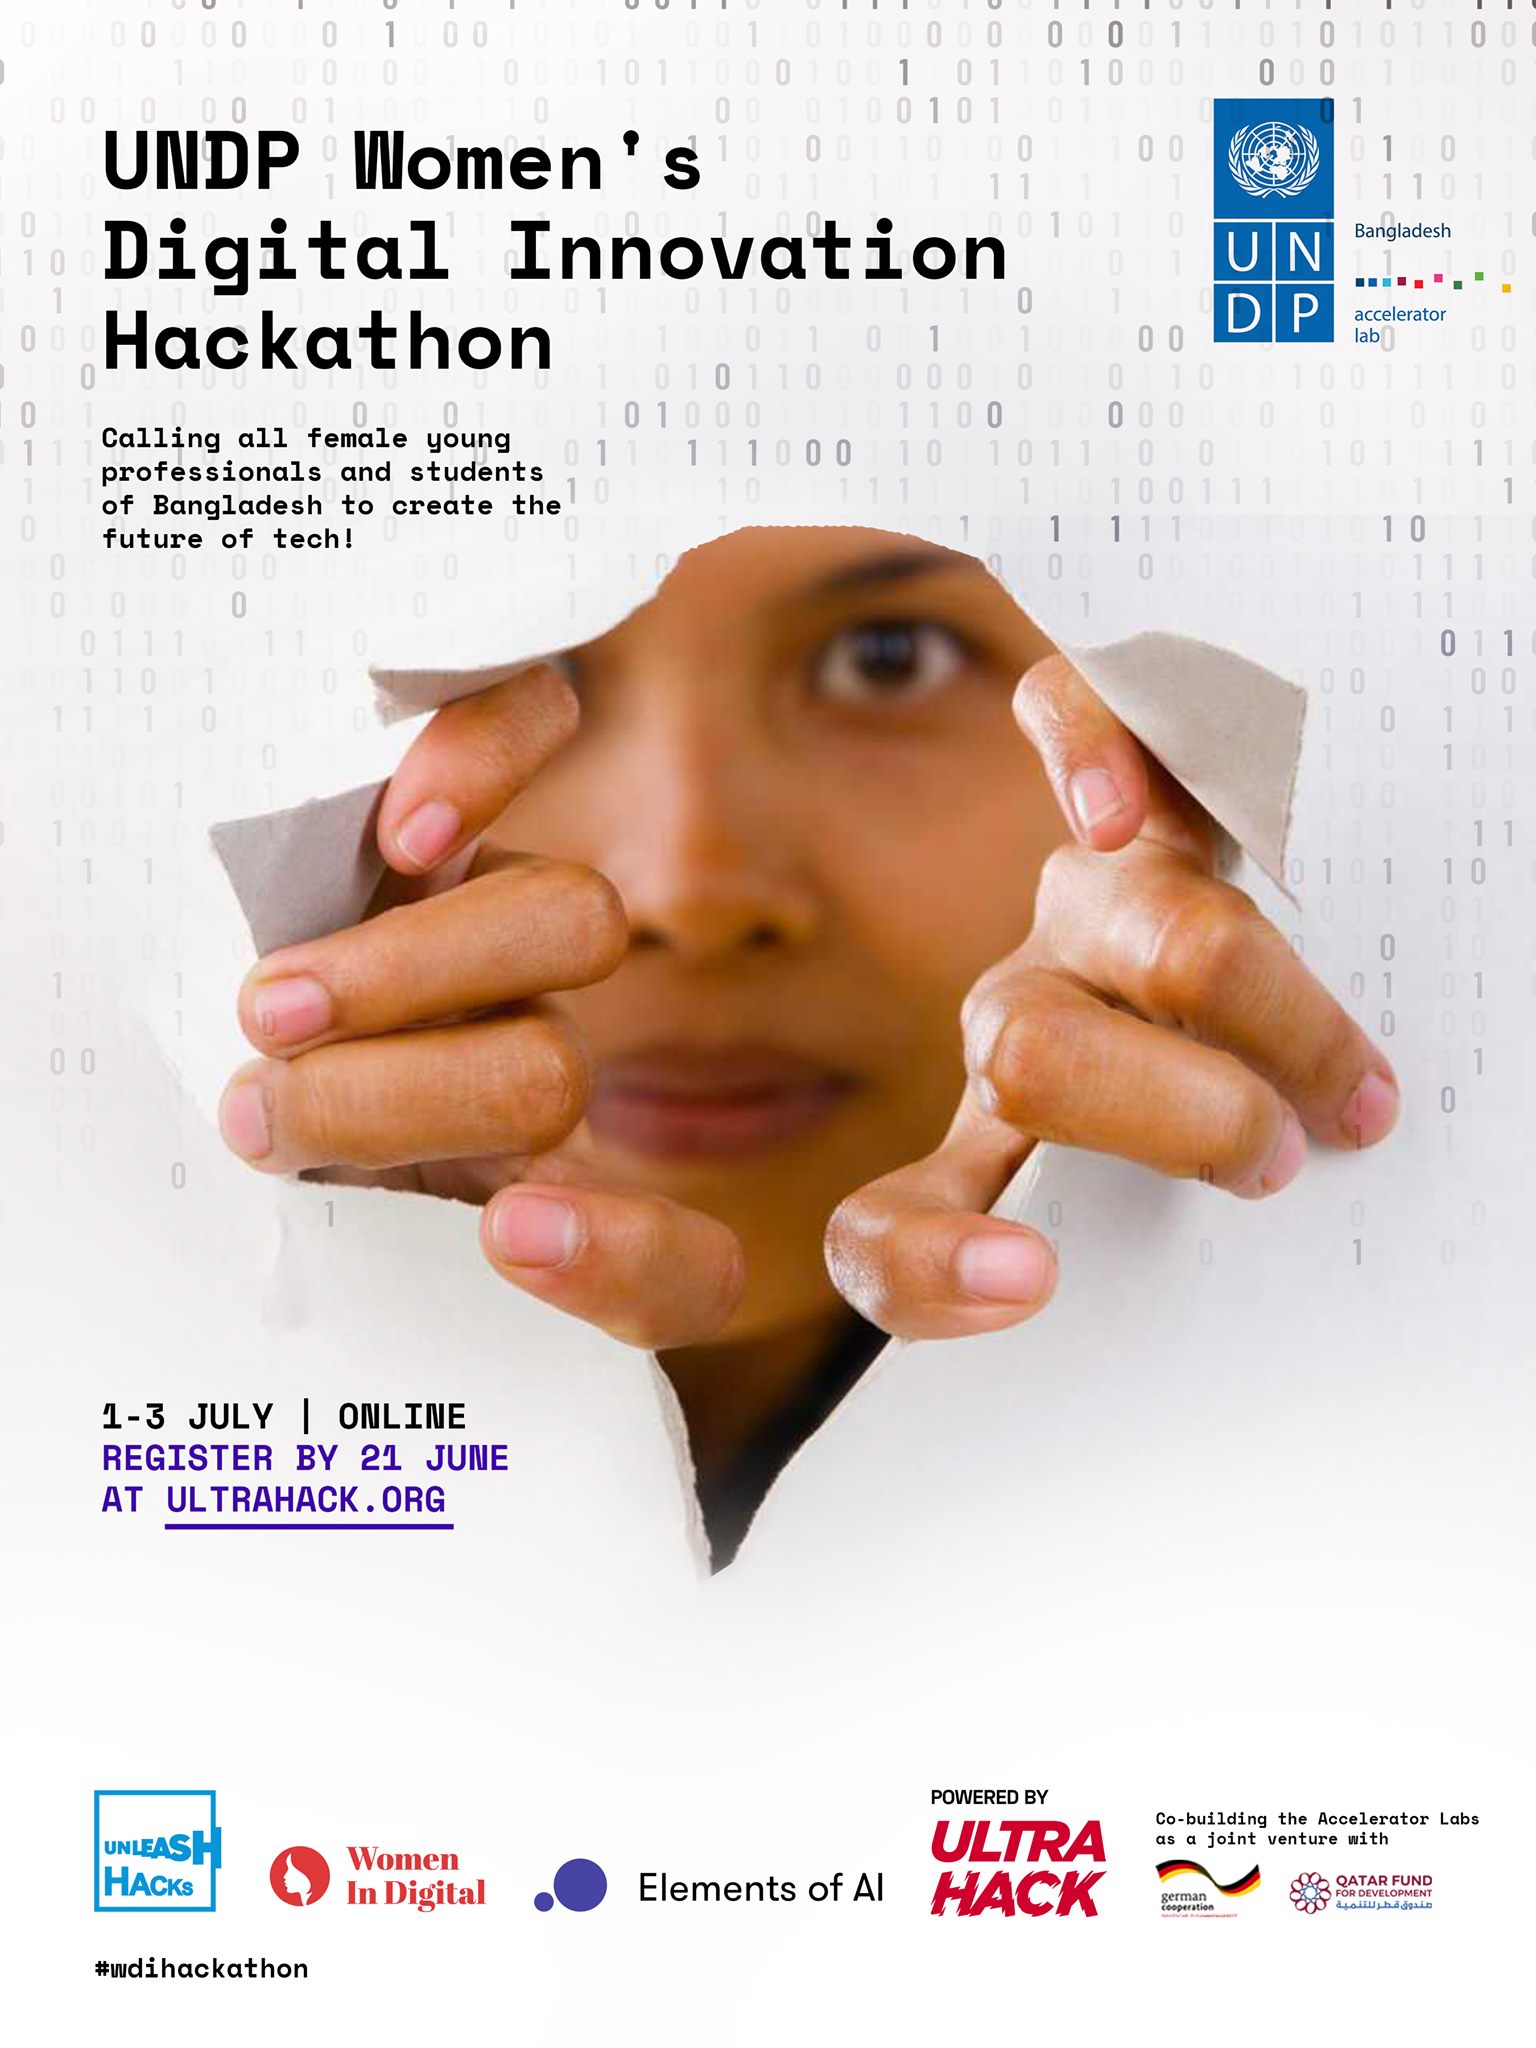 UNDP Women’s Digital Innovation Hackathon-image